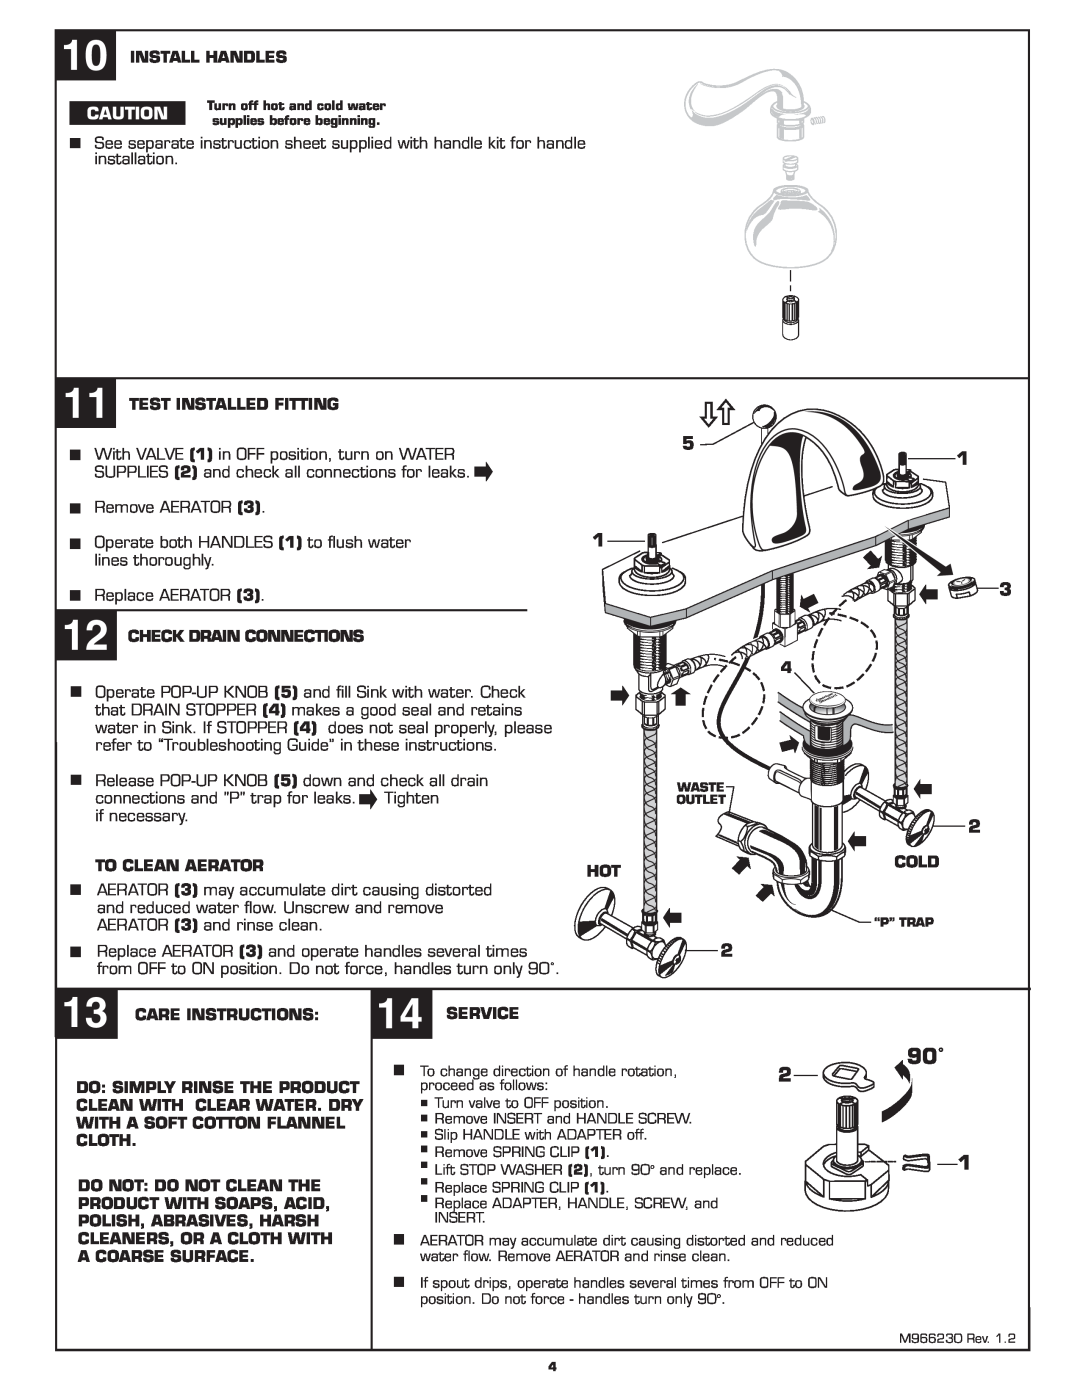 American Standard 8871 installation instructions 